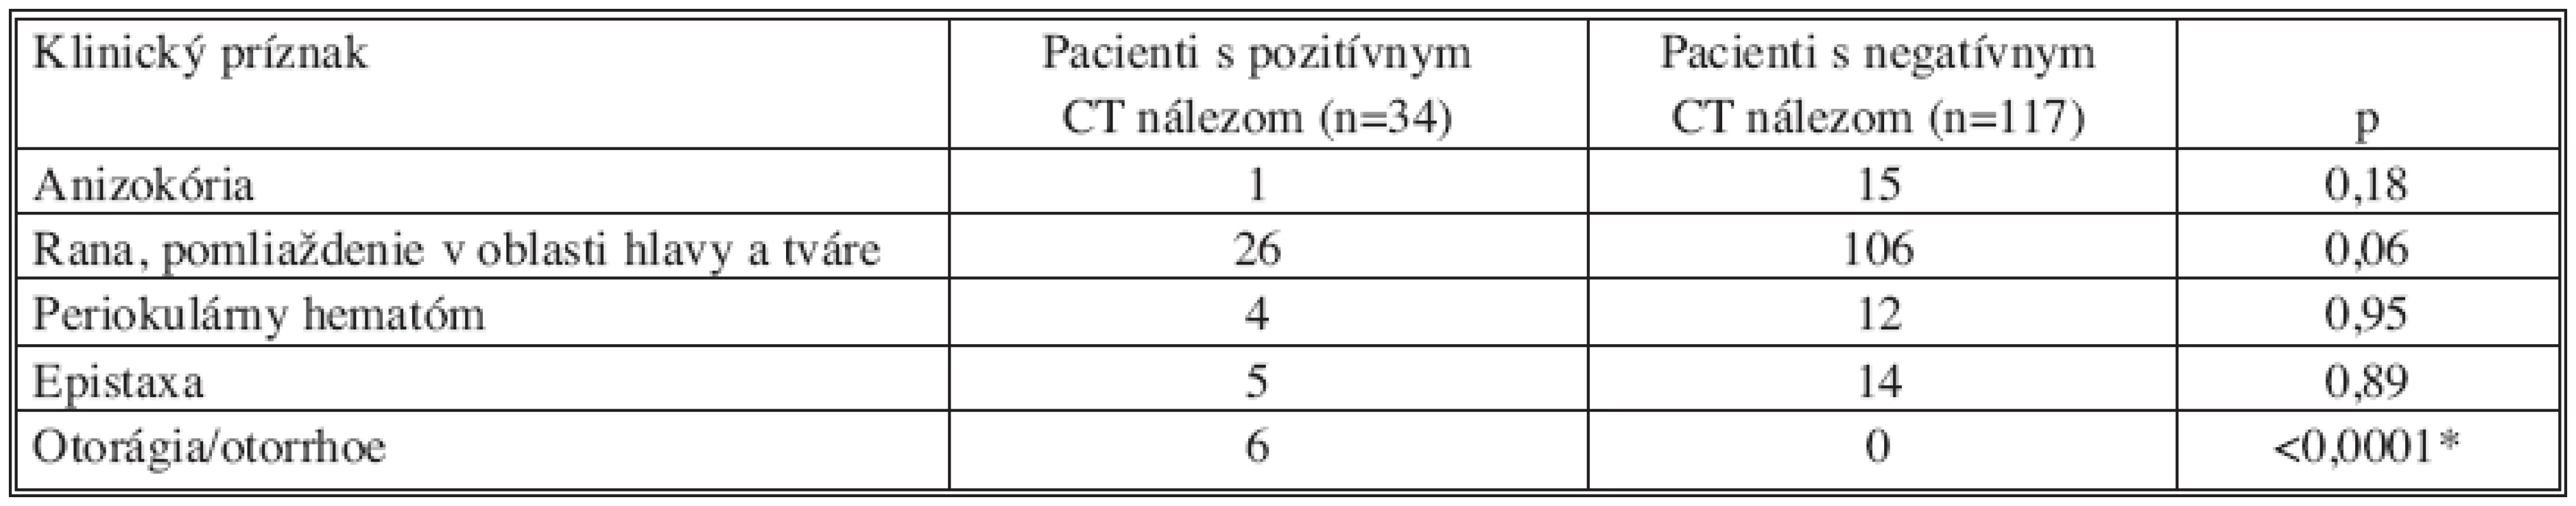 Klinické príznaky poranenia u etylizovaných pacientov (n = 151)
Tab. 4. Clinical symptoms of the injuries in the ethylized patients (n = 151)